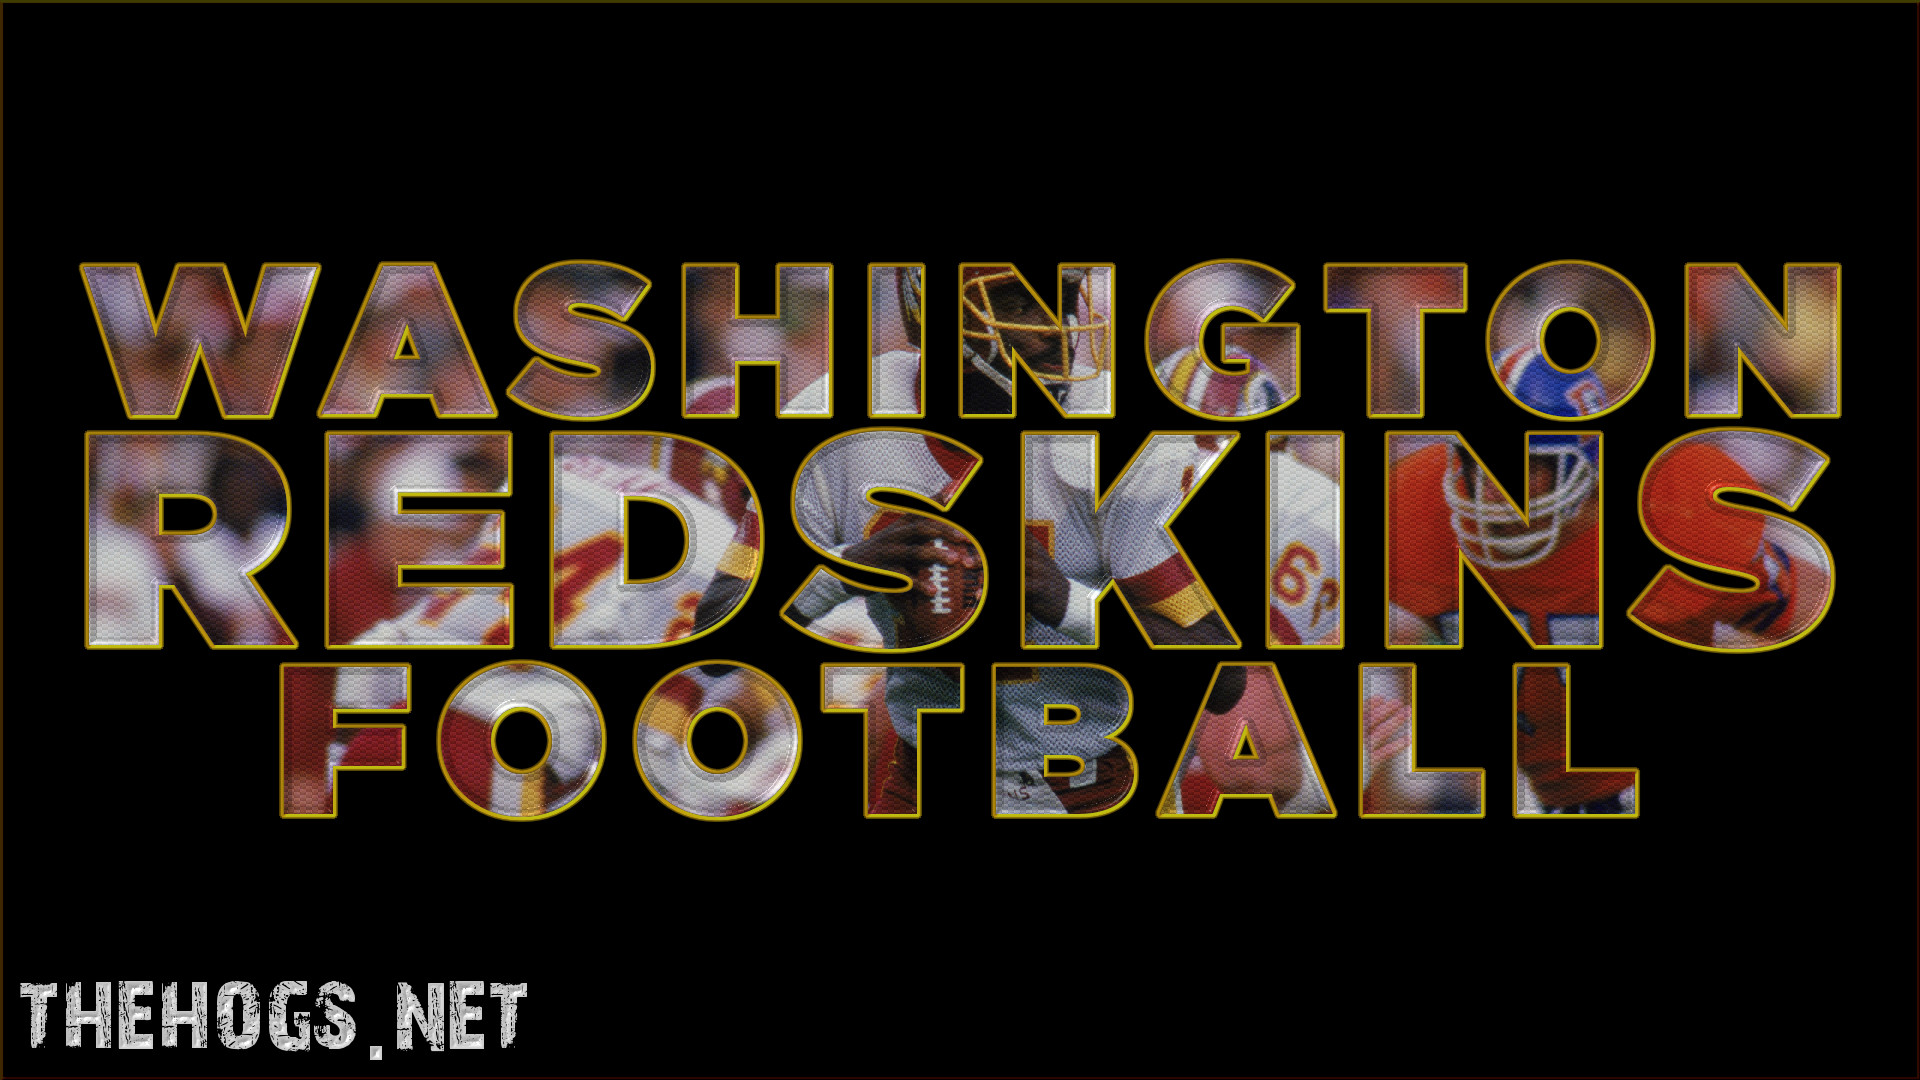 Washington Redskins Football